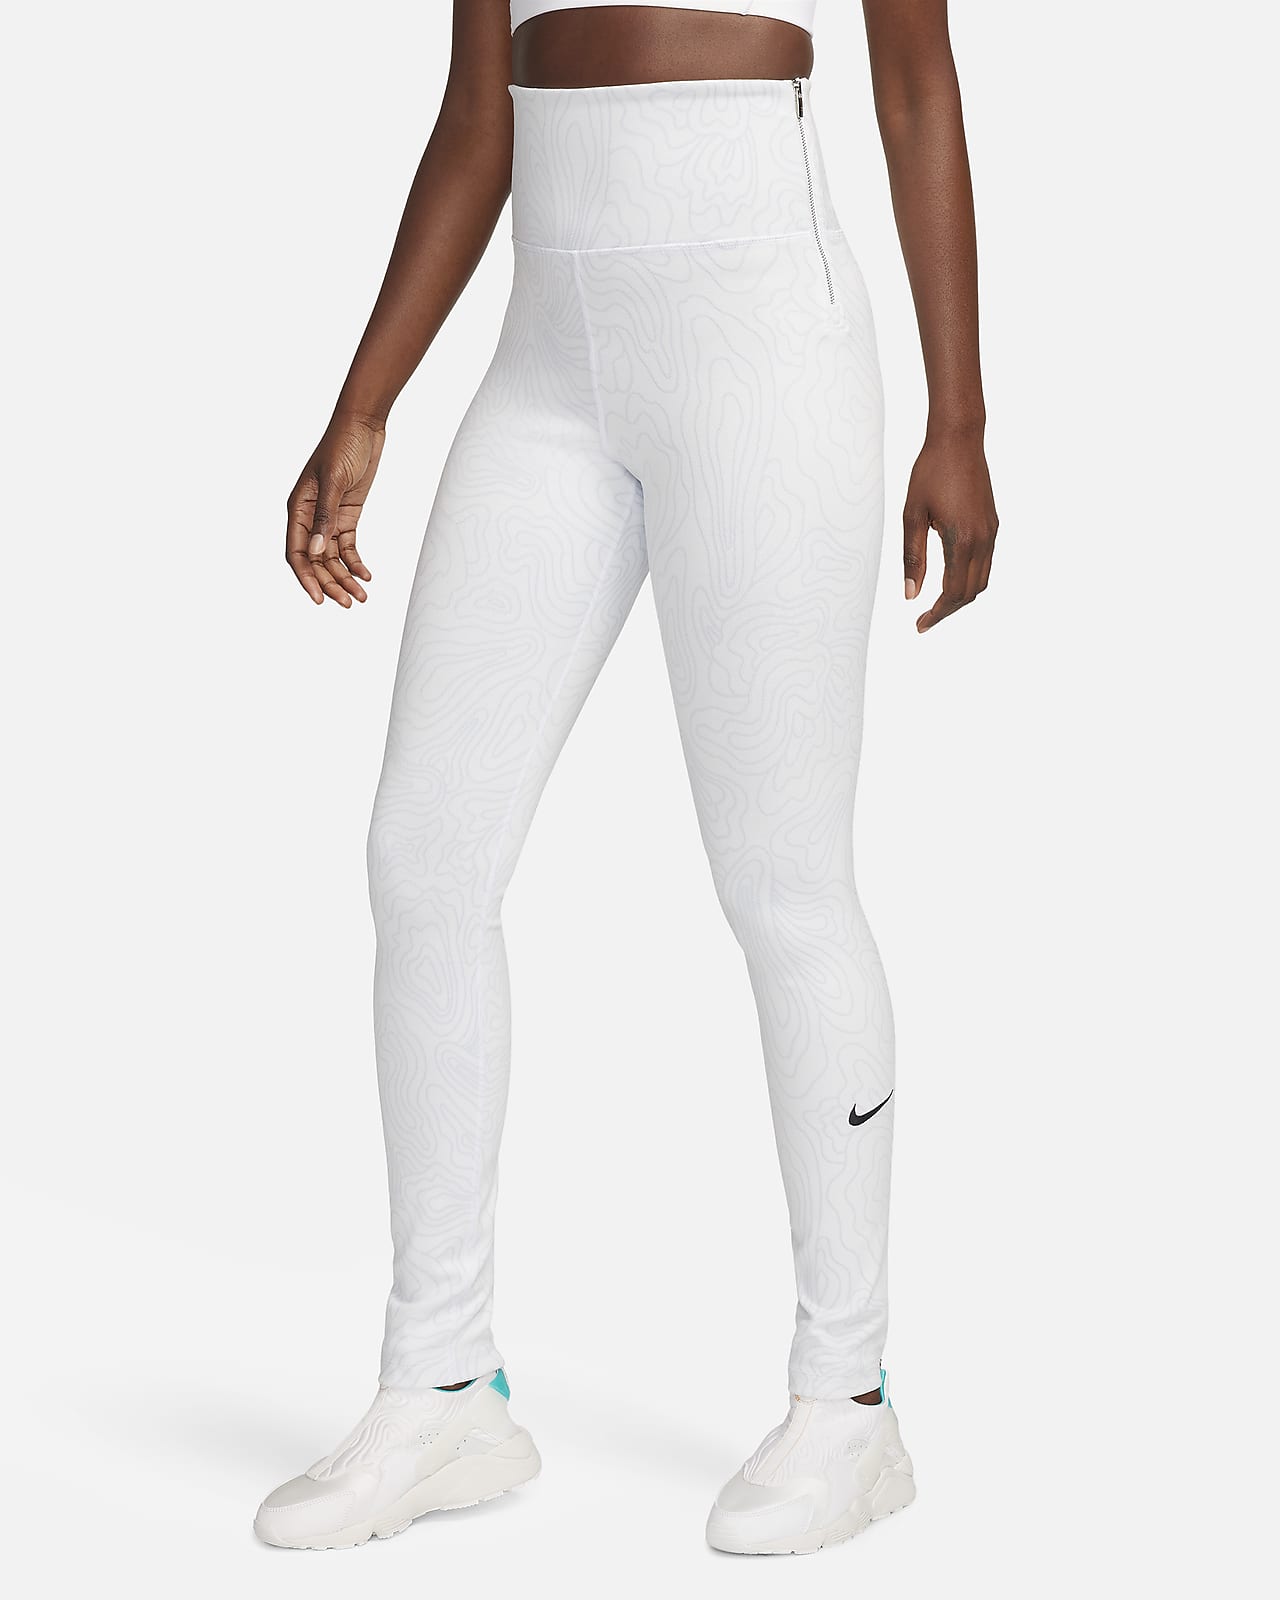 Serena Williams Design Crew Women's Jacquard Knit Pants